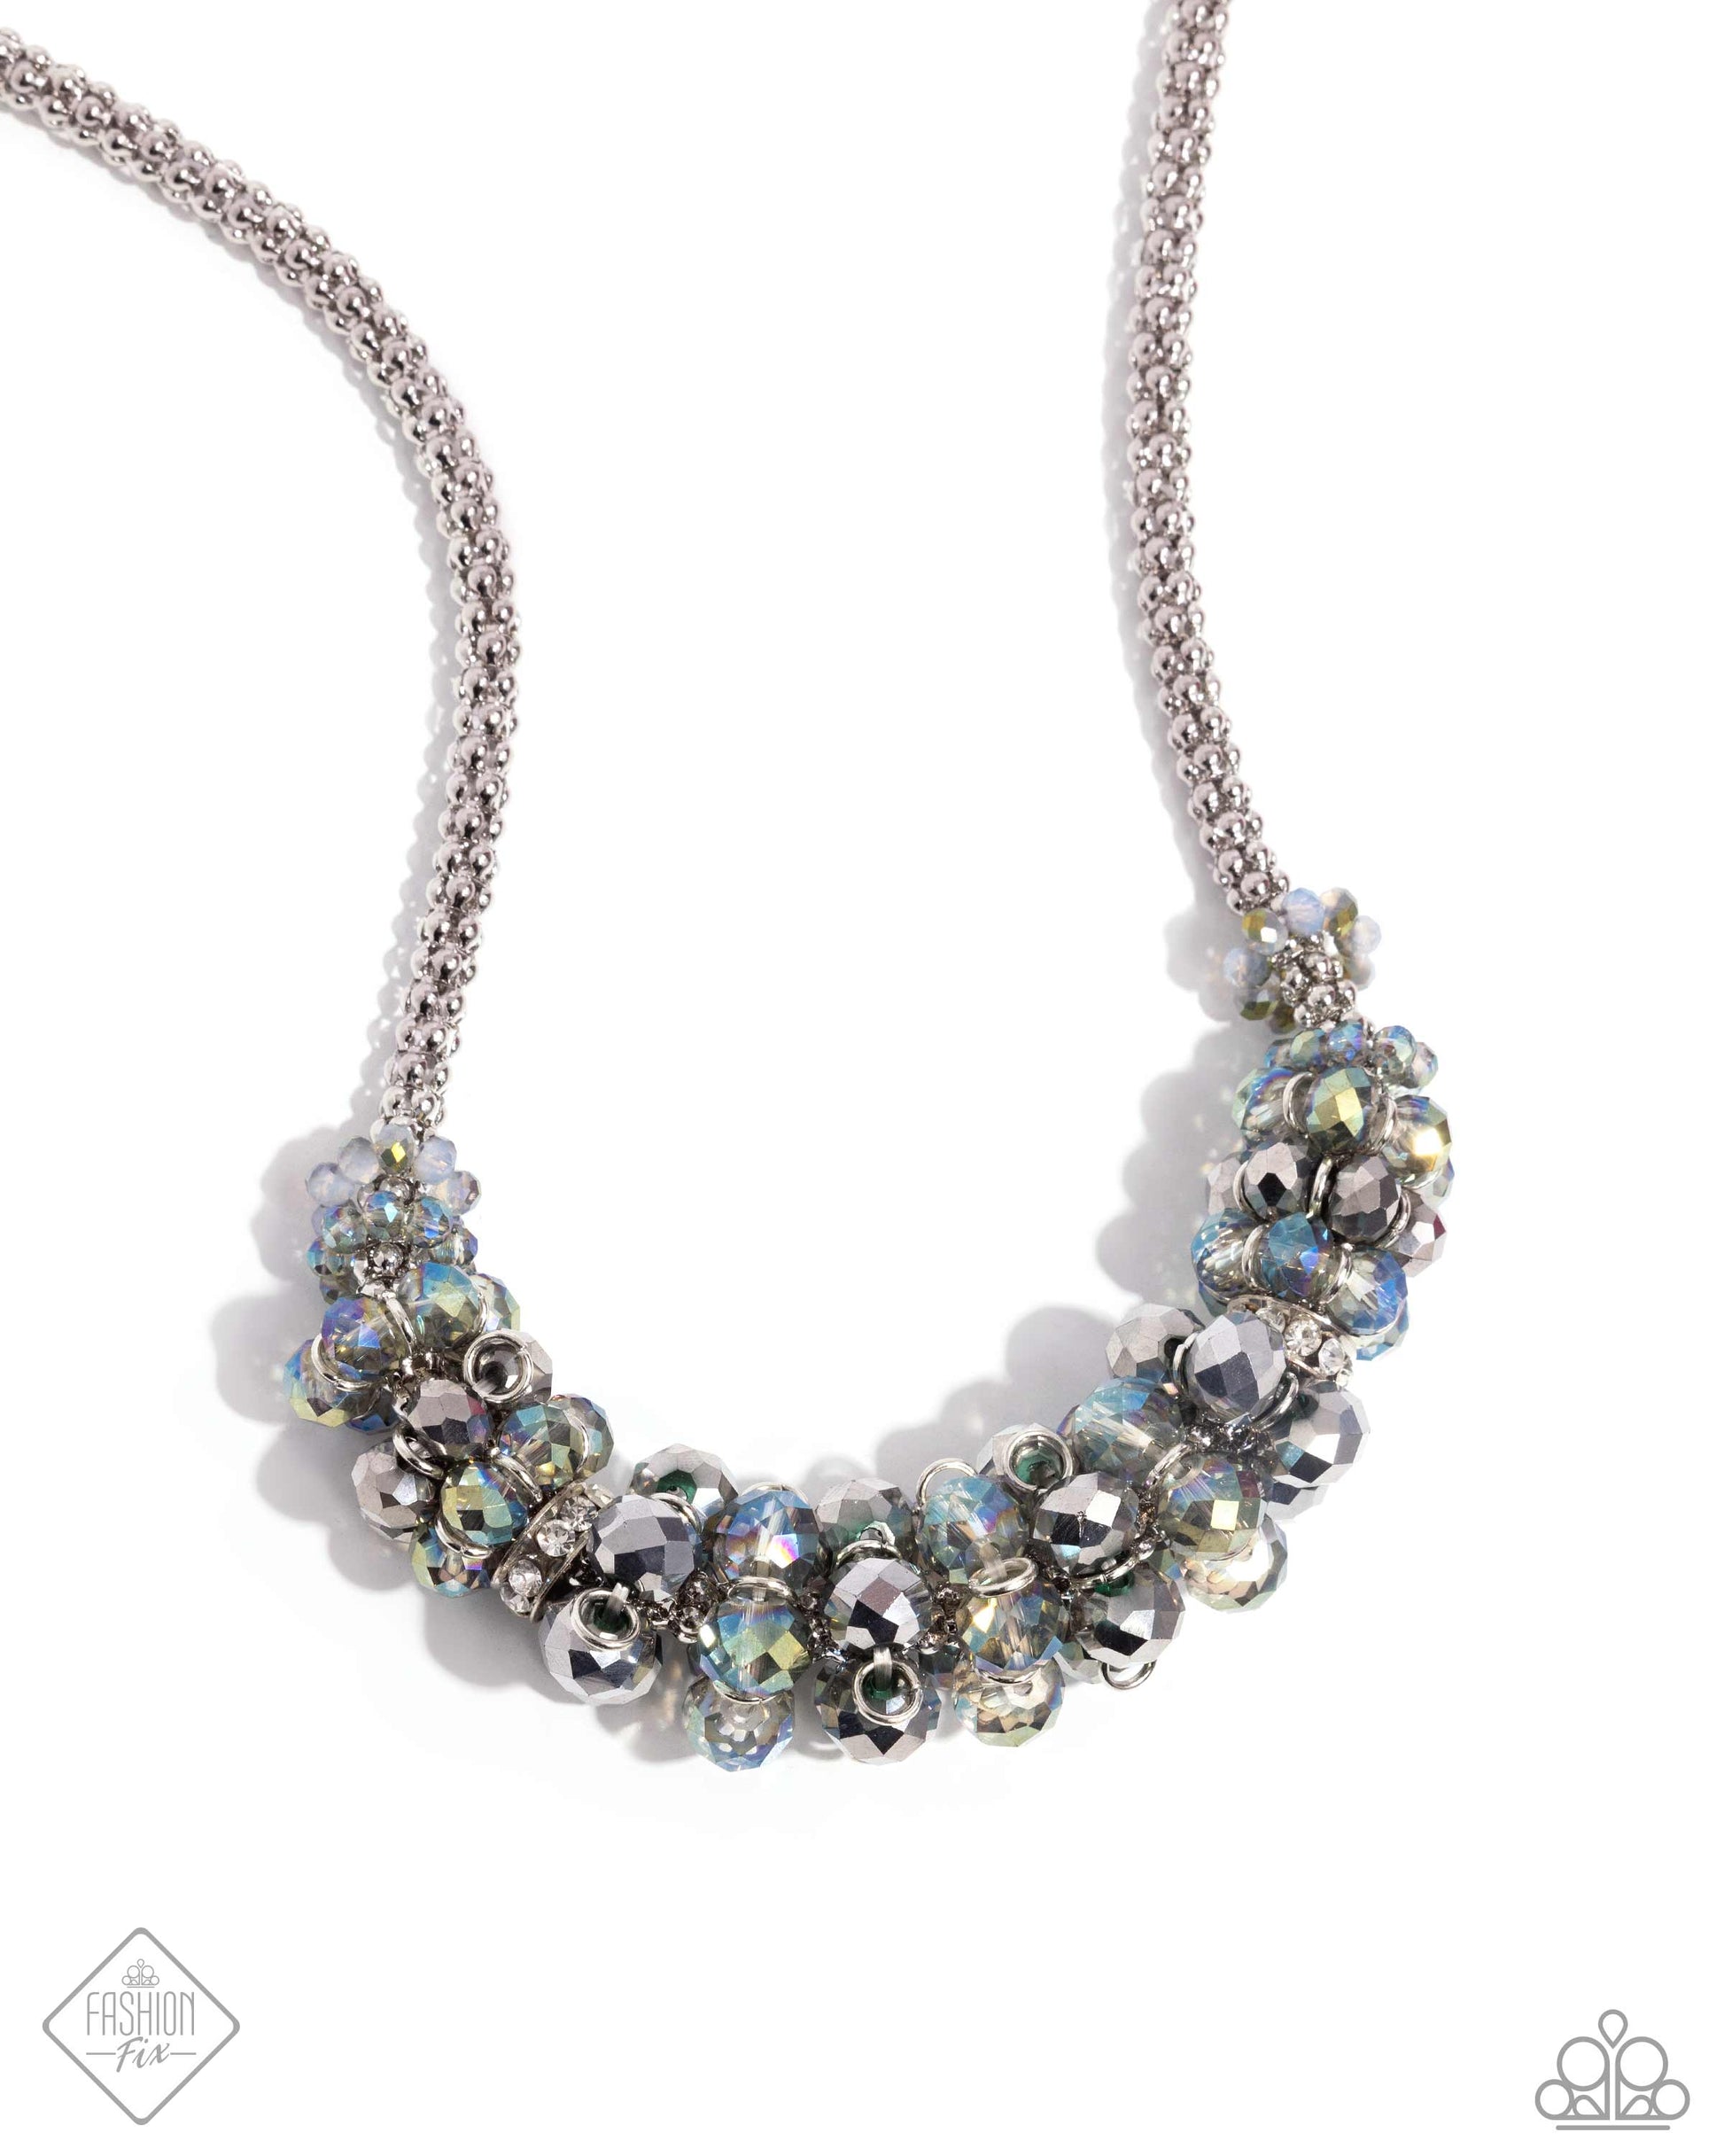 Ignited Impression - silver - Paparazzi necklace